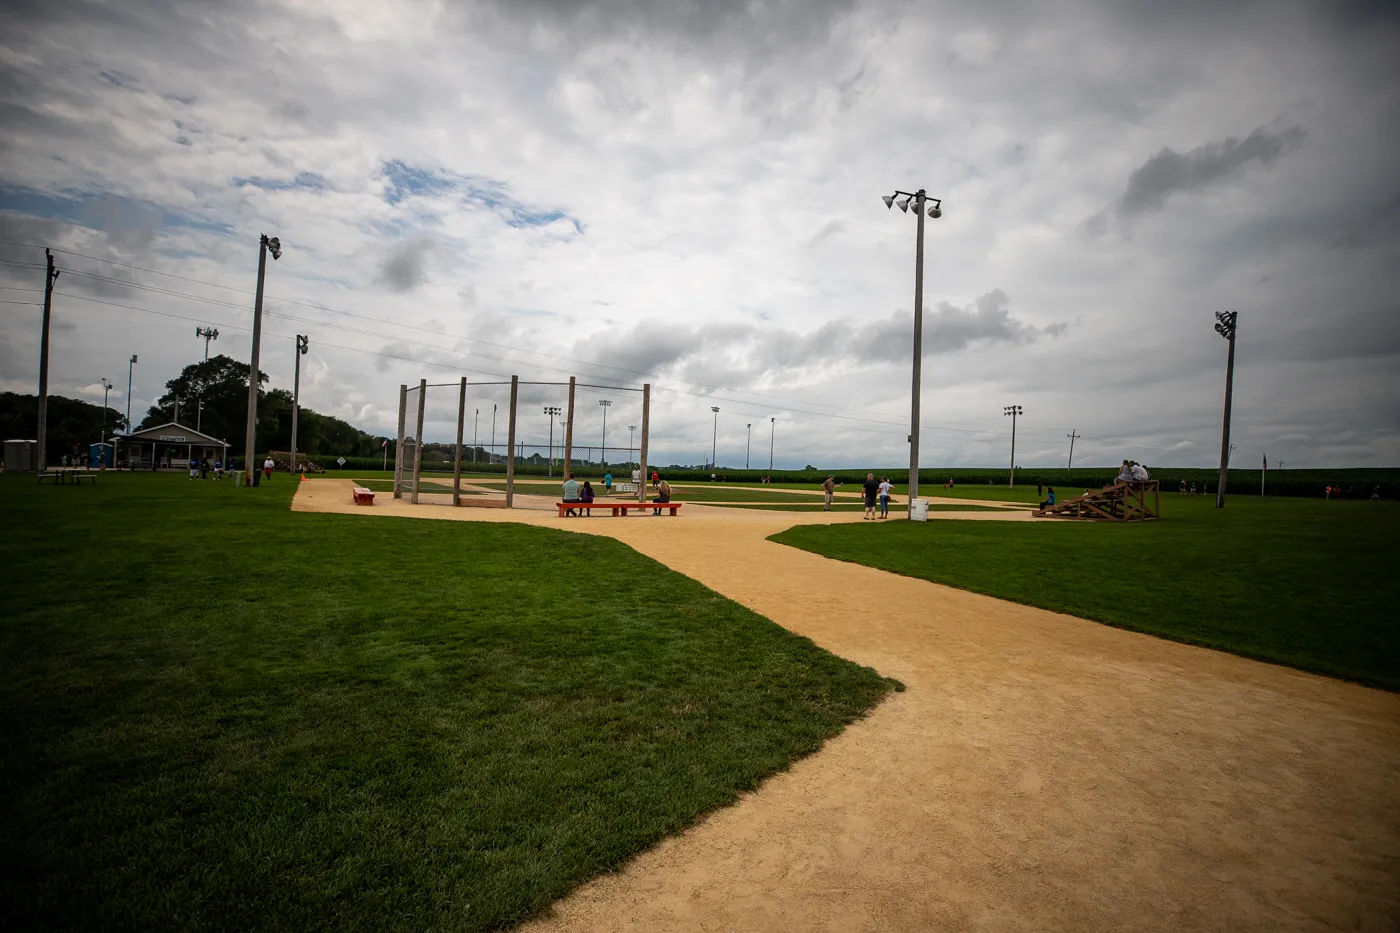 Baseball diamond at the Field of Dreams Movie Site in Dyersville, Iowa